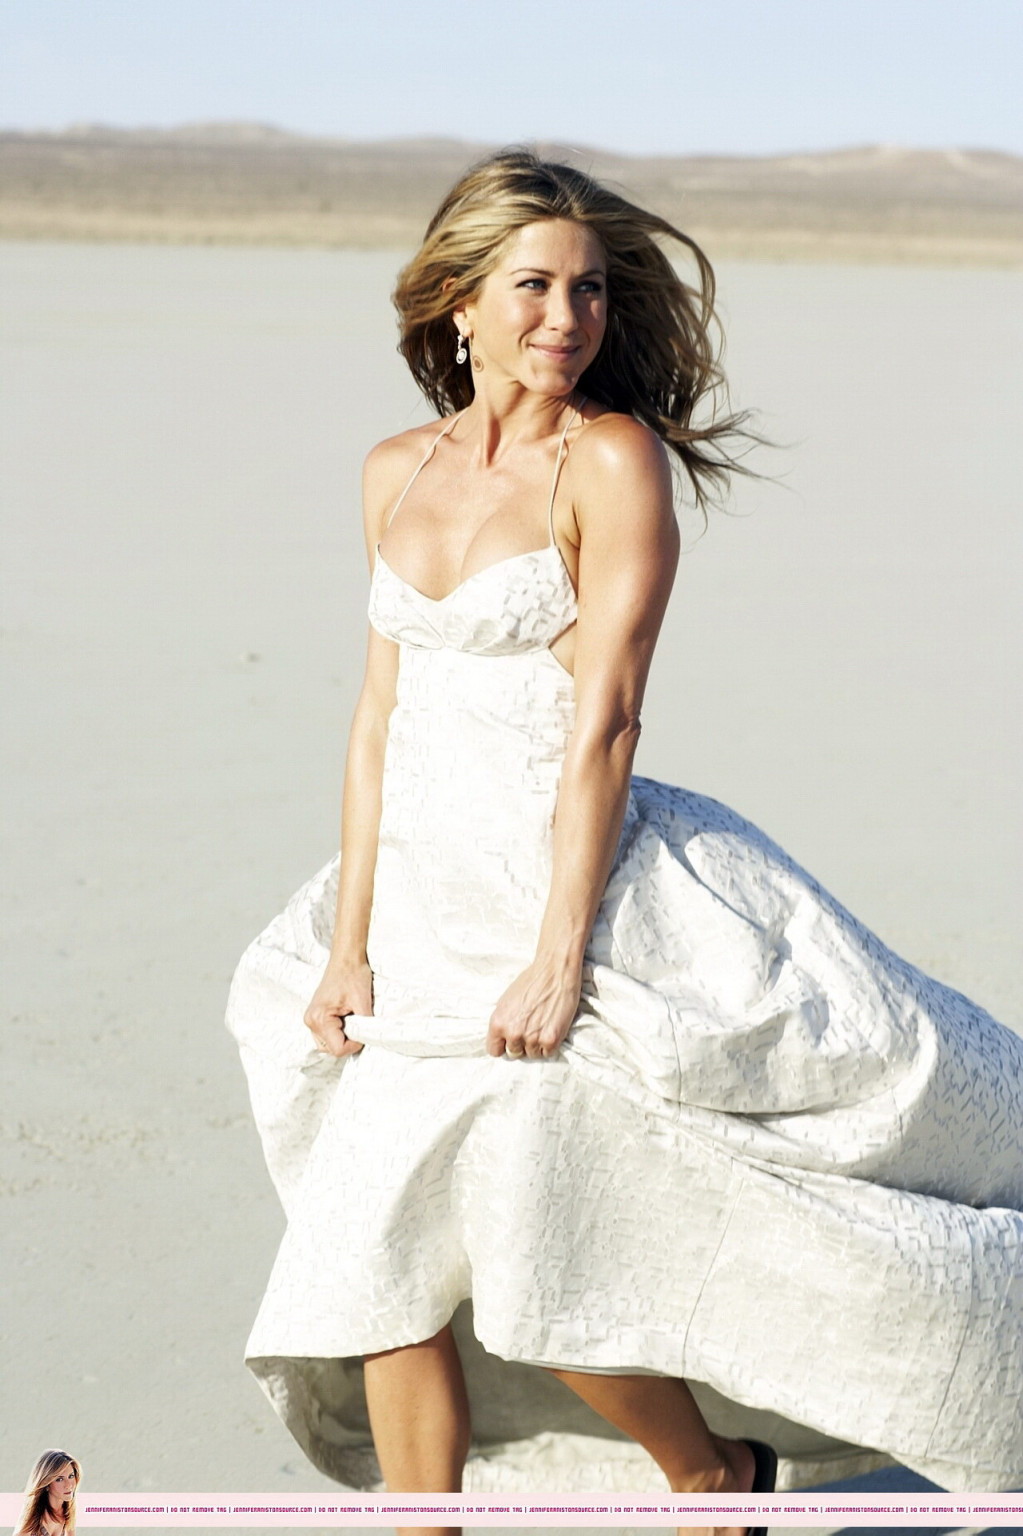 Jennifer aniston quasi nip slip al photoshoot spiaggia 'harper's bazaar'
 #75337049